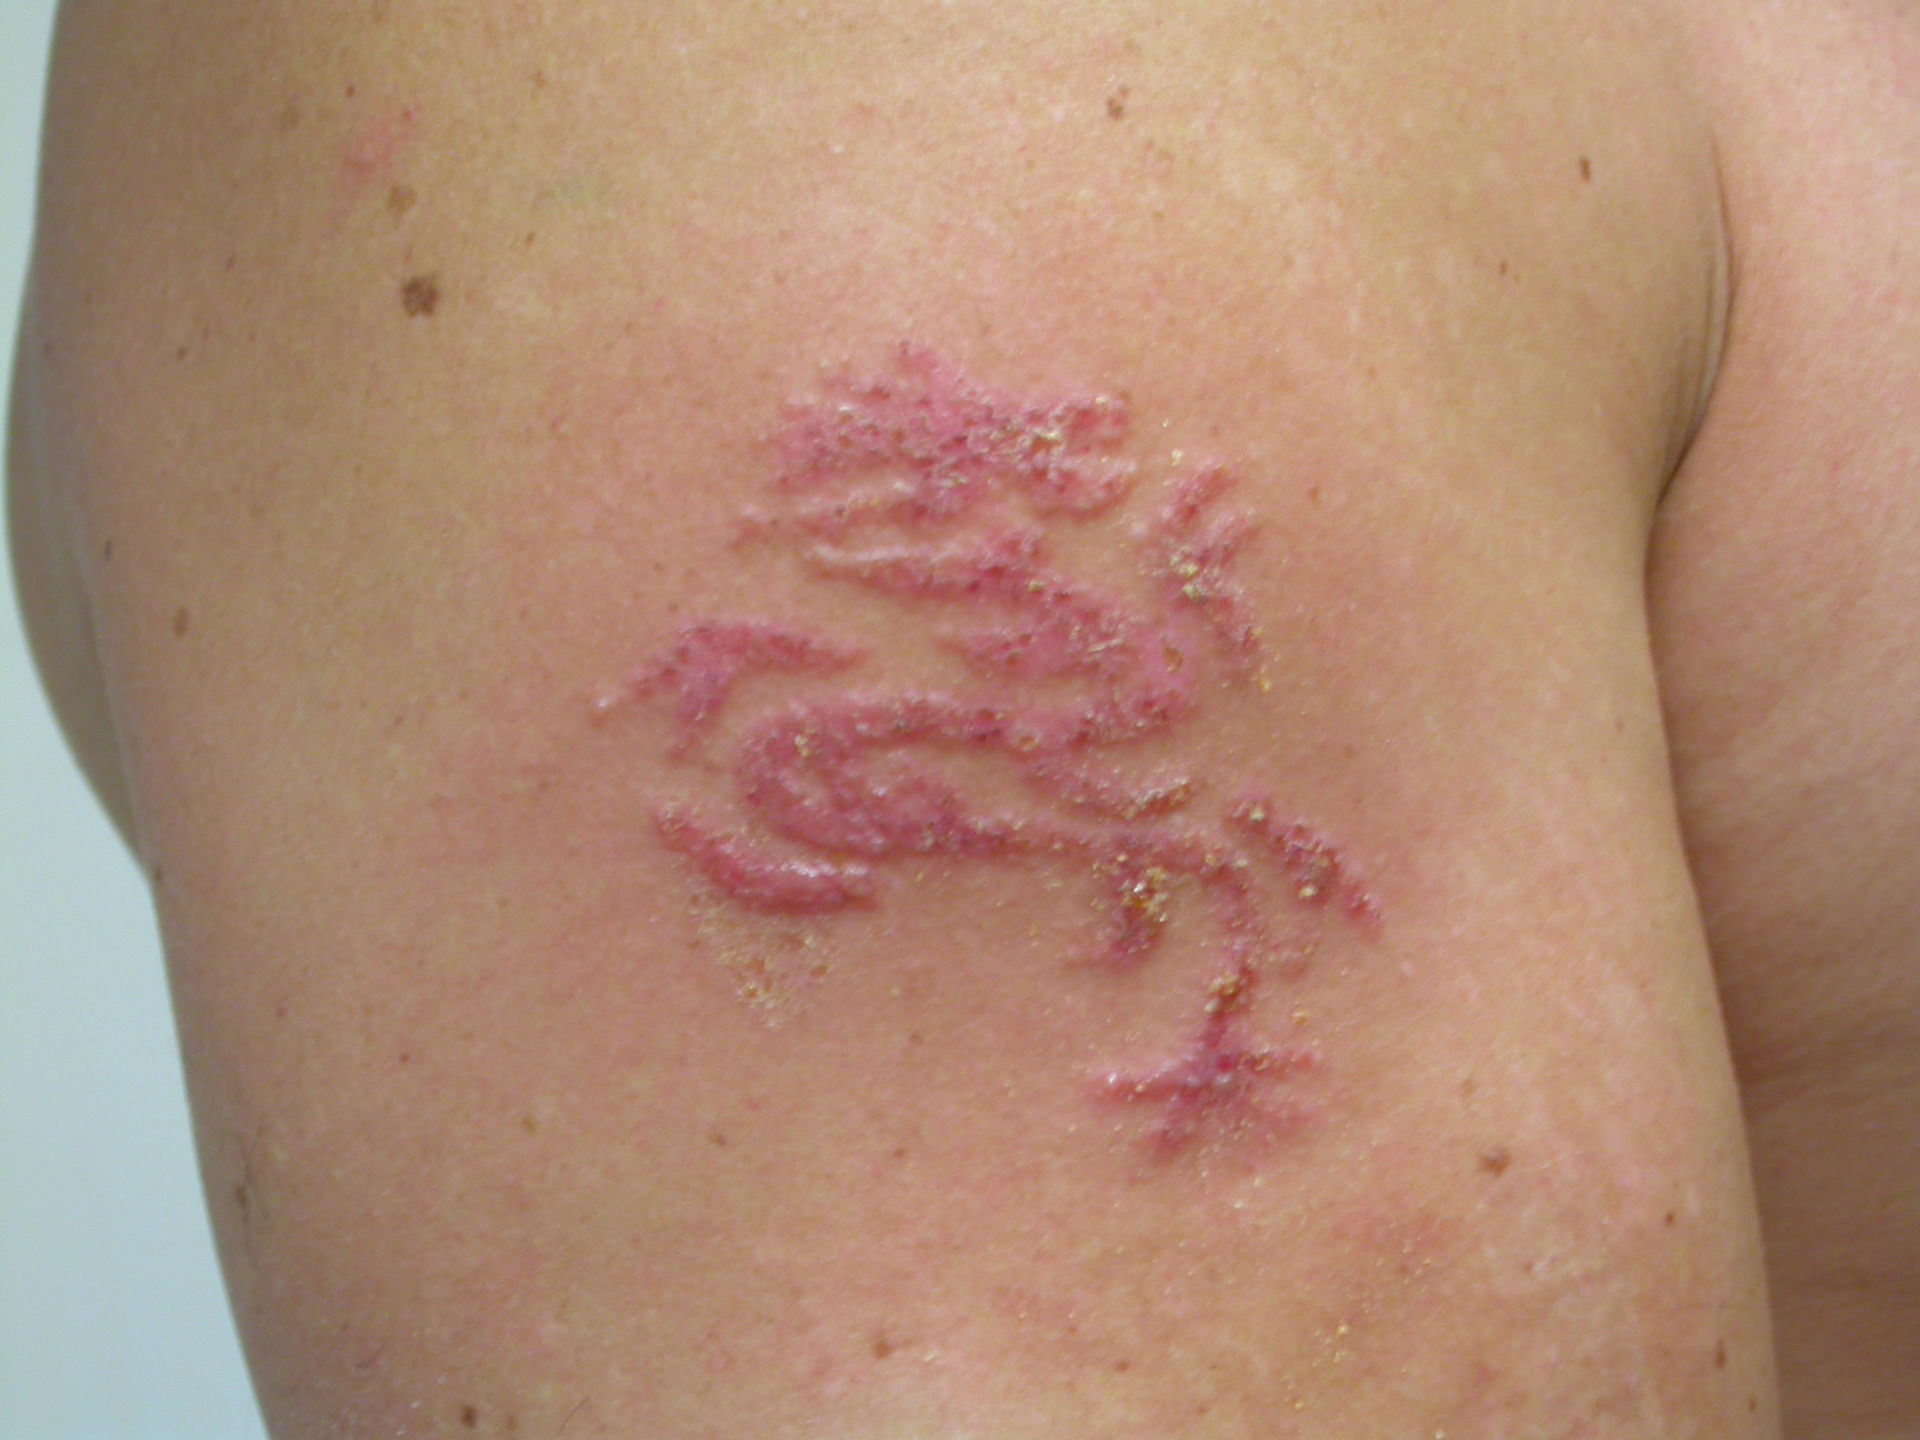 Contact eczema due to henna